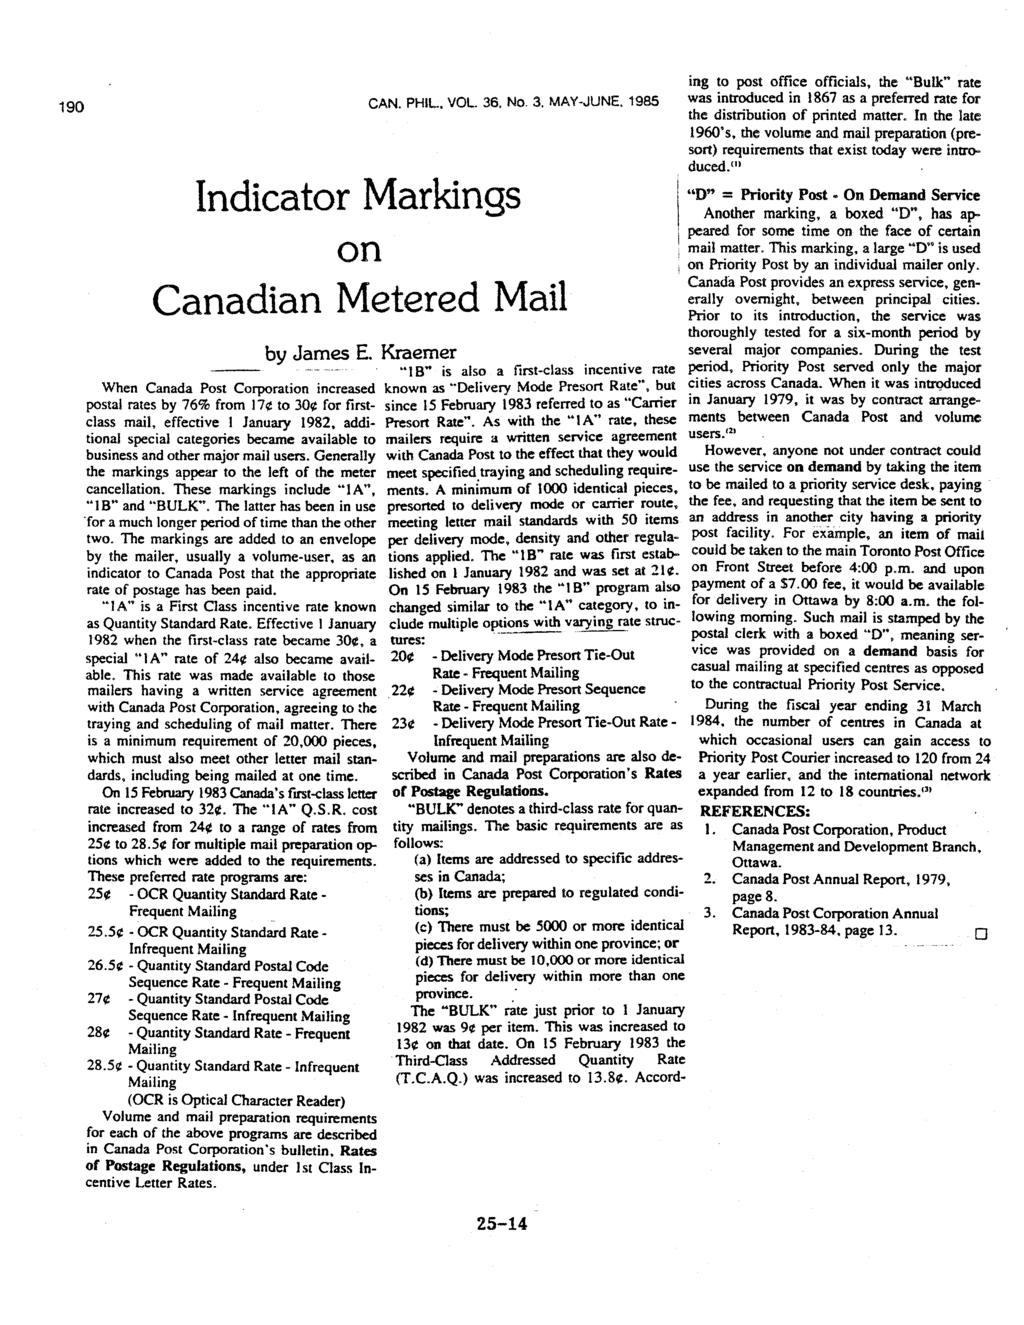 canada meter std ) newsletter - pdf